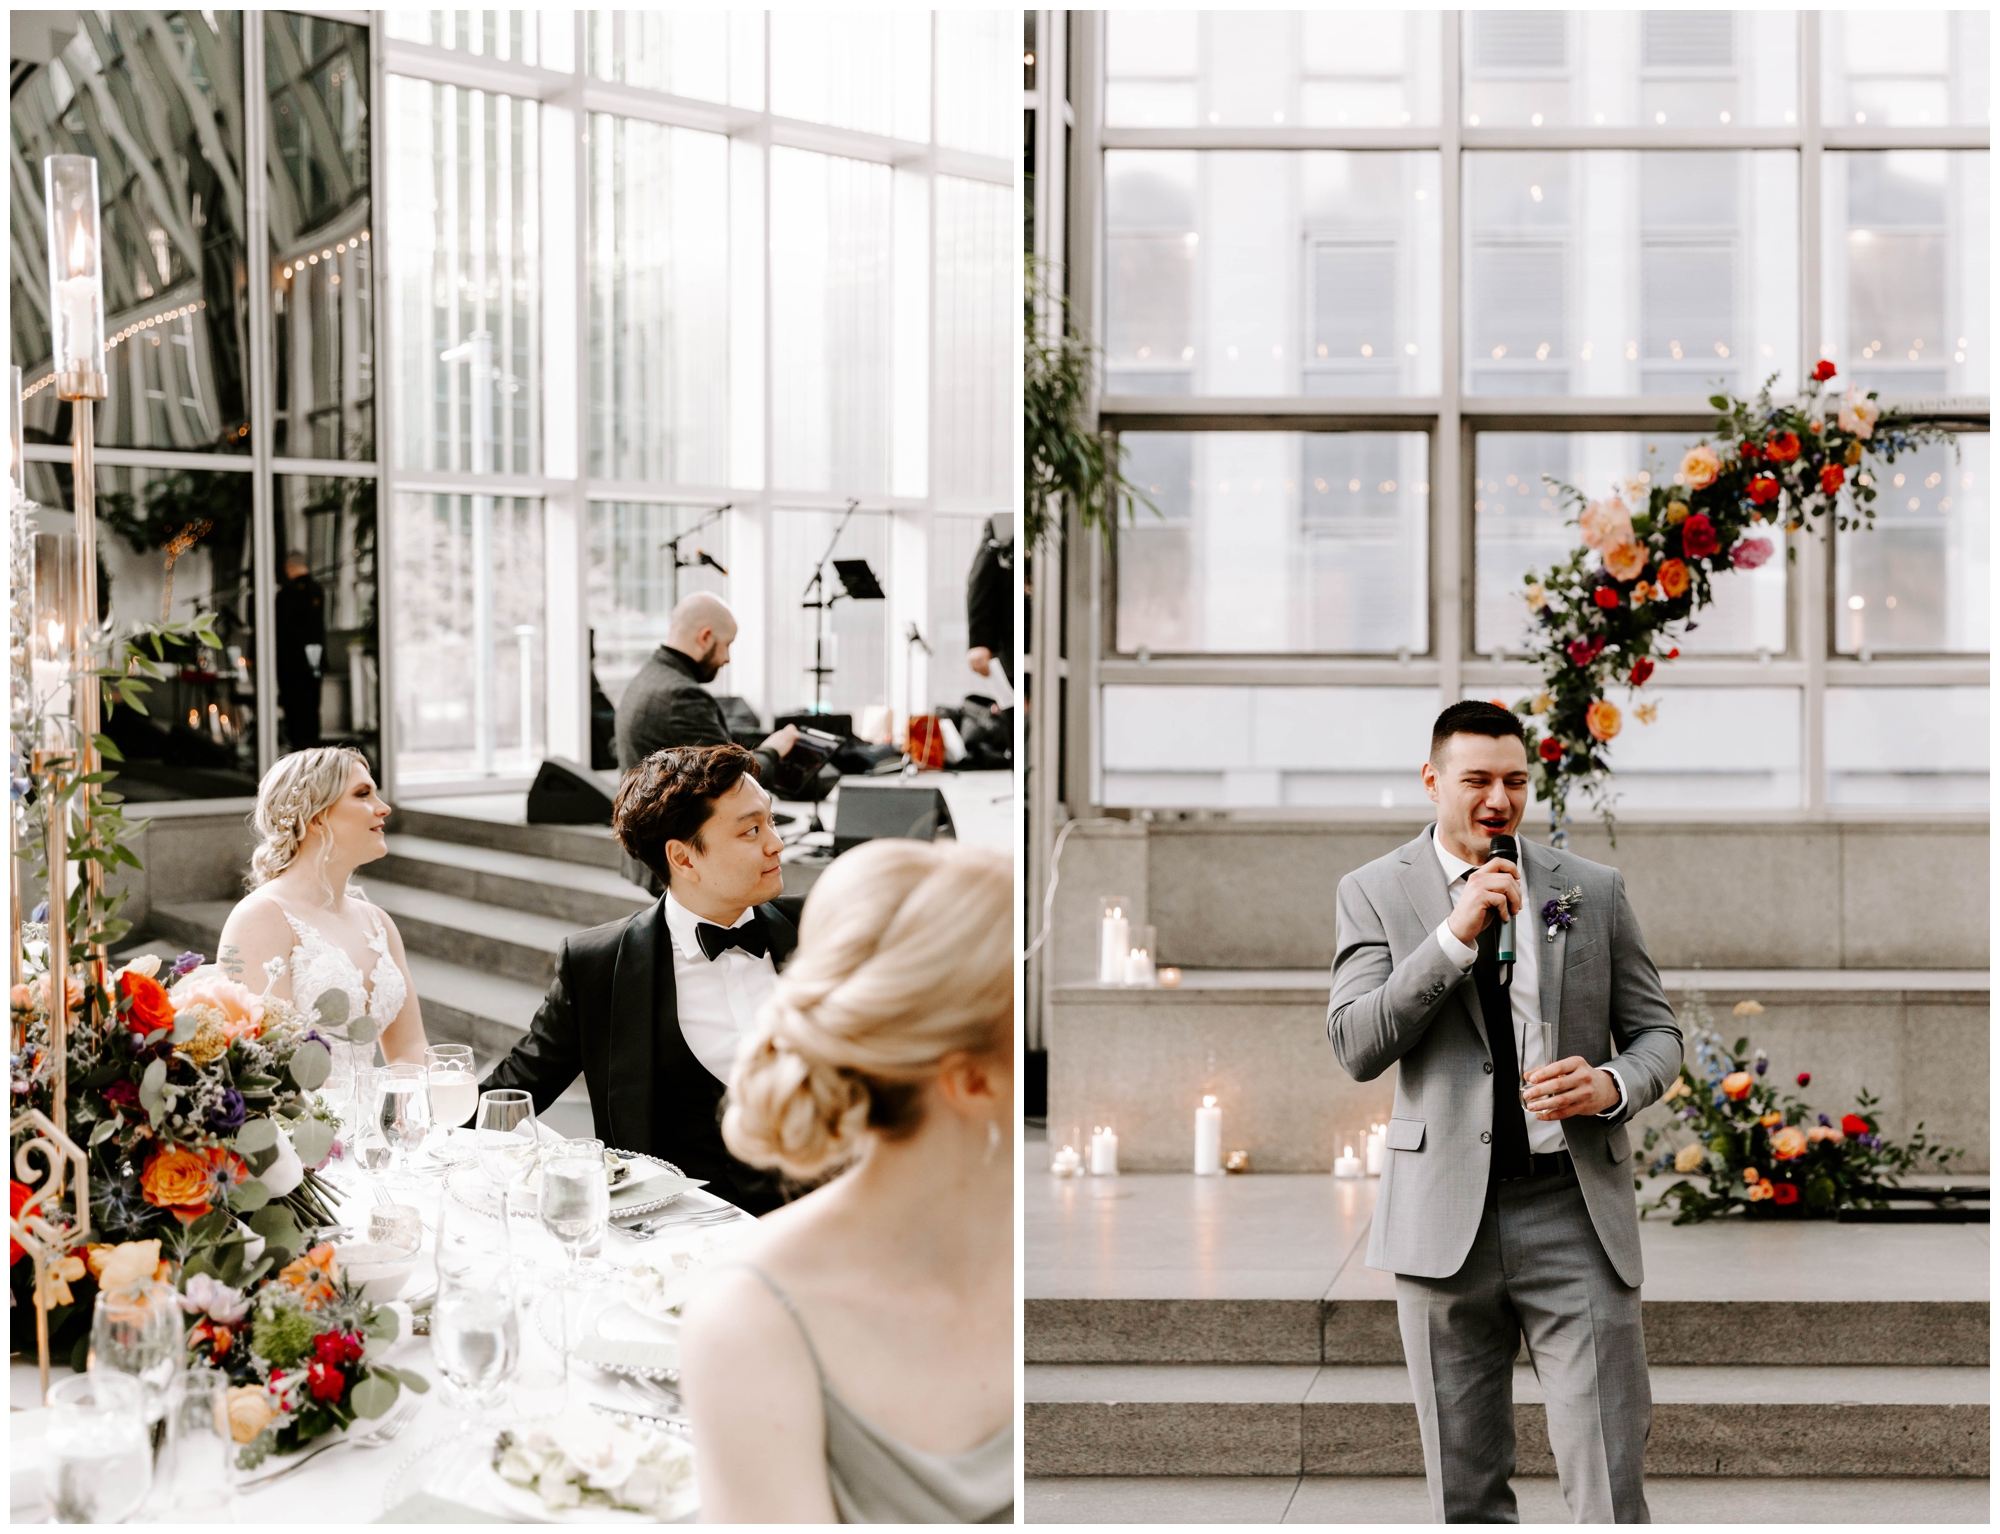 Greenhouse wedding venues; glass house wedding venues; PPG Wintergarden wedding